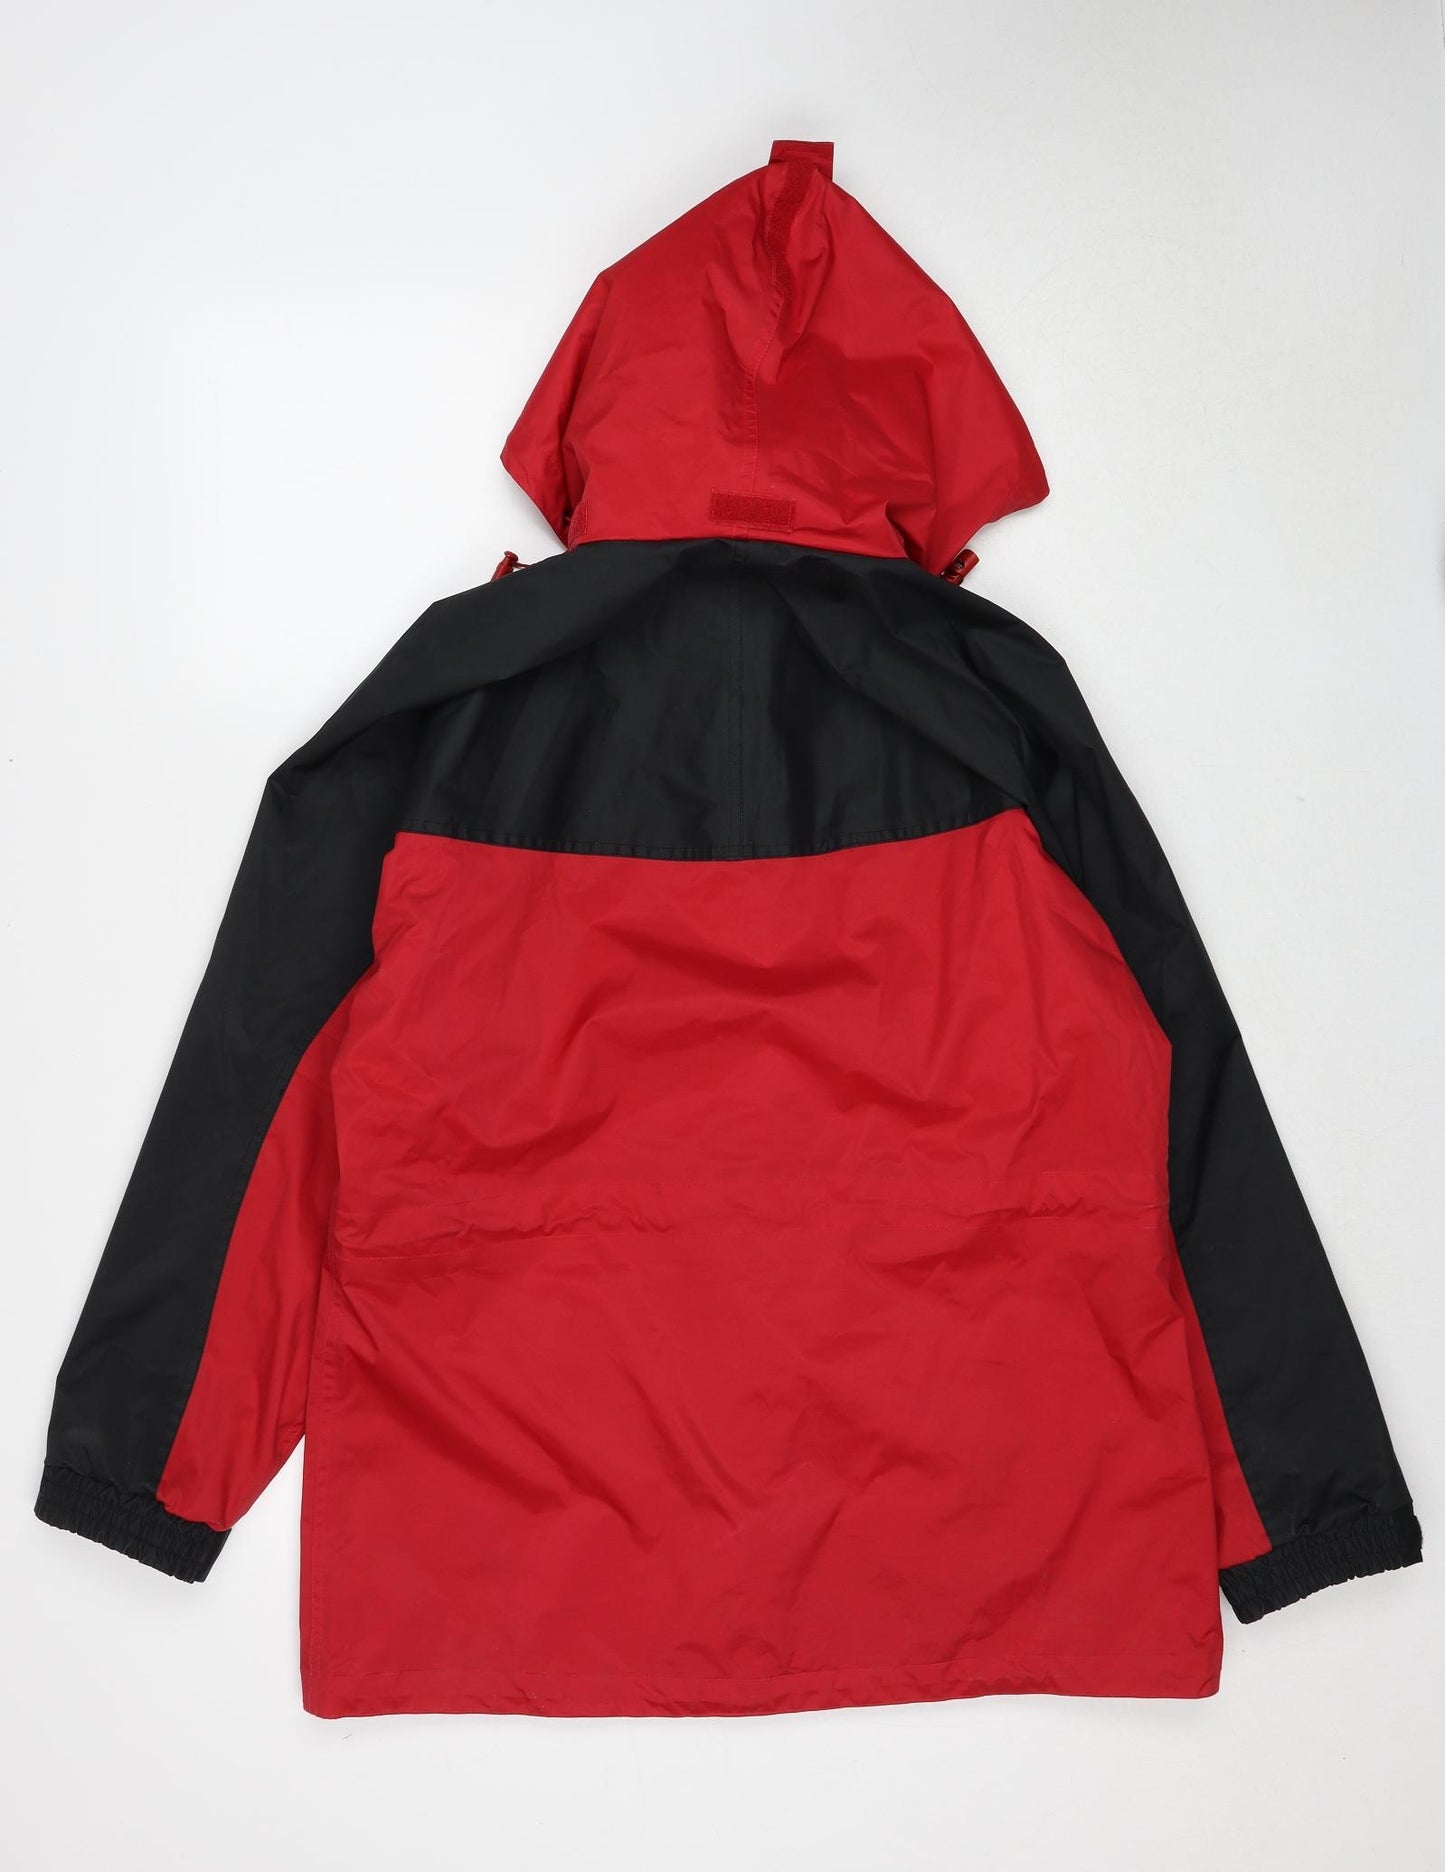 Classics Womens Red Geometric Jacket Size 12 Zip - PVC Coating